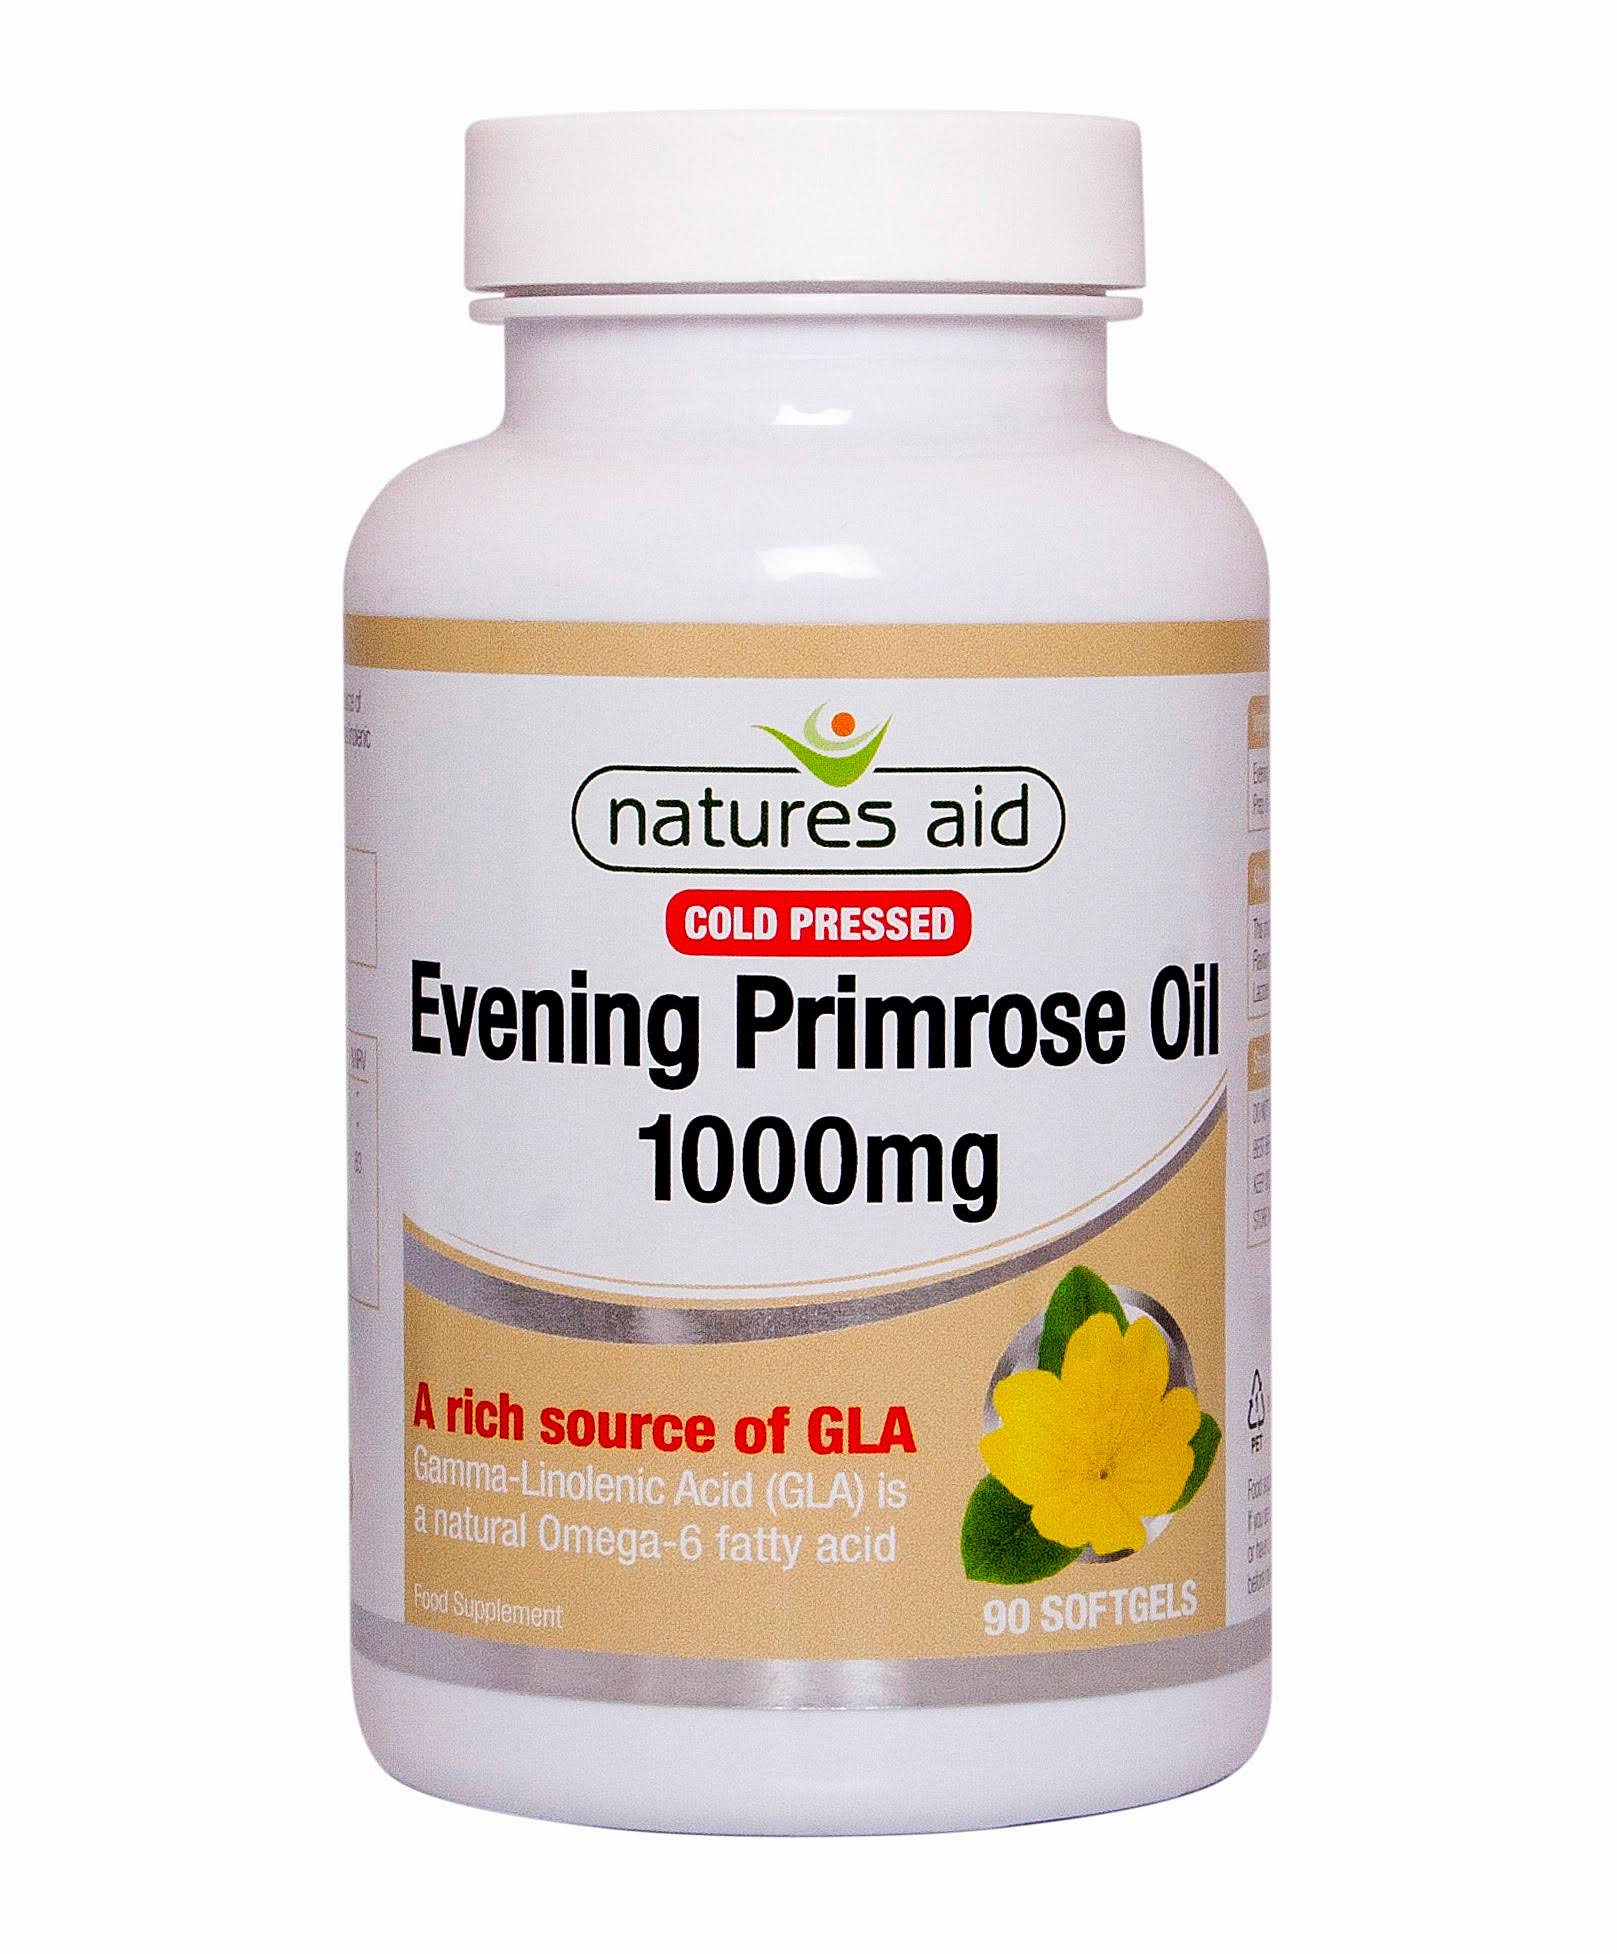 Natures Aid Everyday Essentials Evening Primrose Oil - 1000mg, 90 Pack